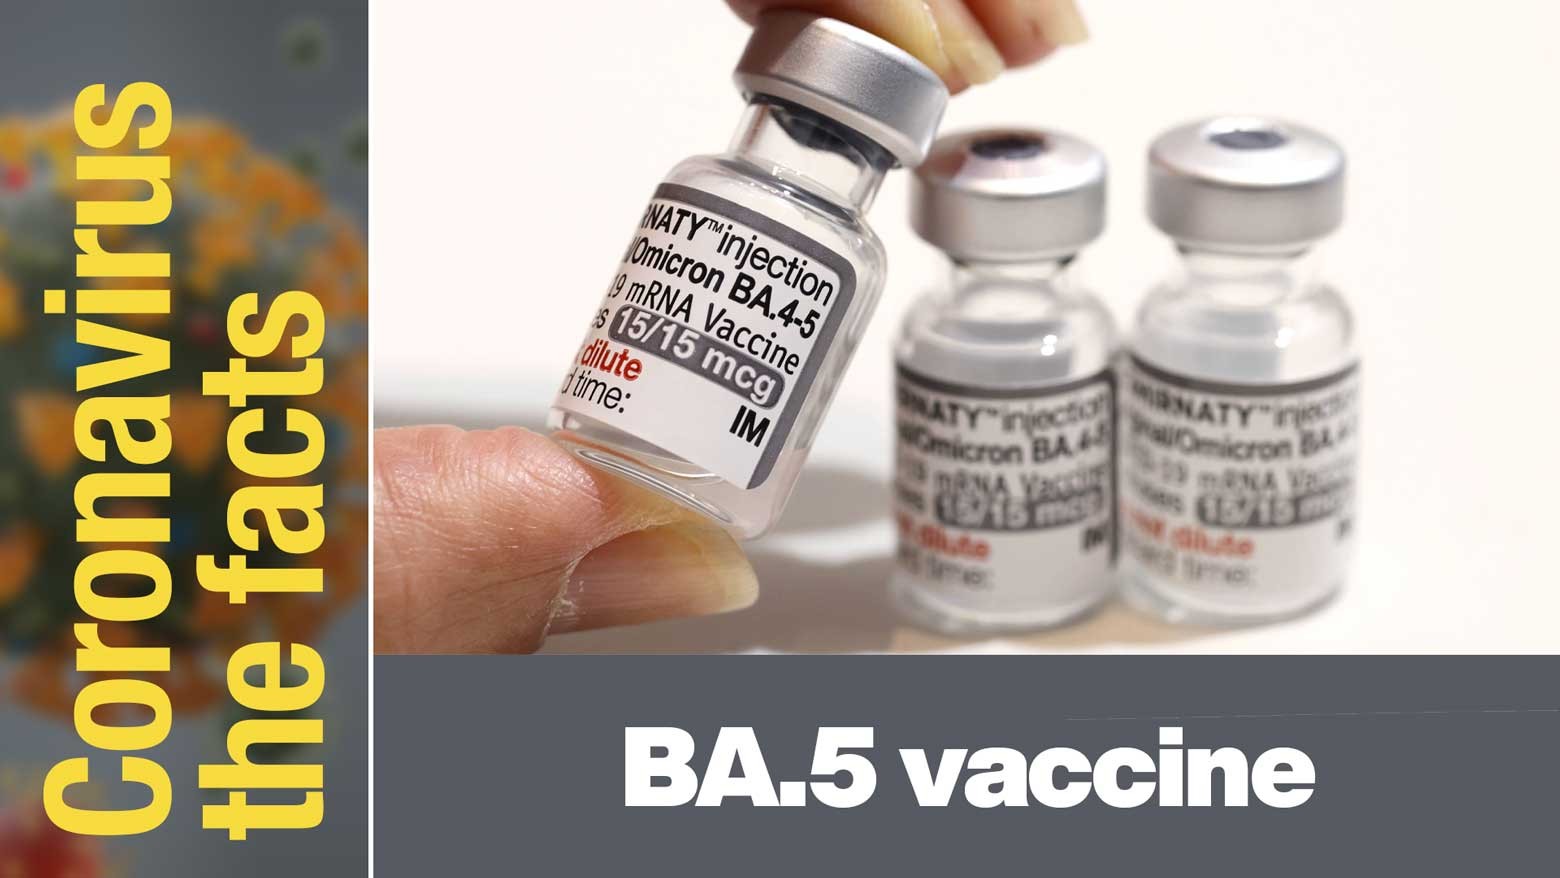 Omicron BA.5 vaccine in Japan